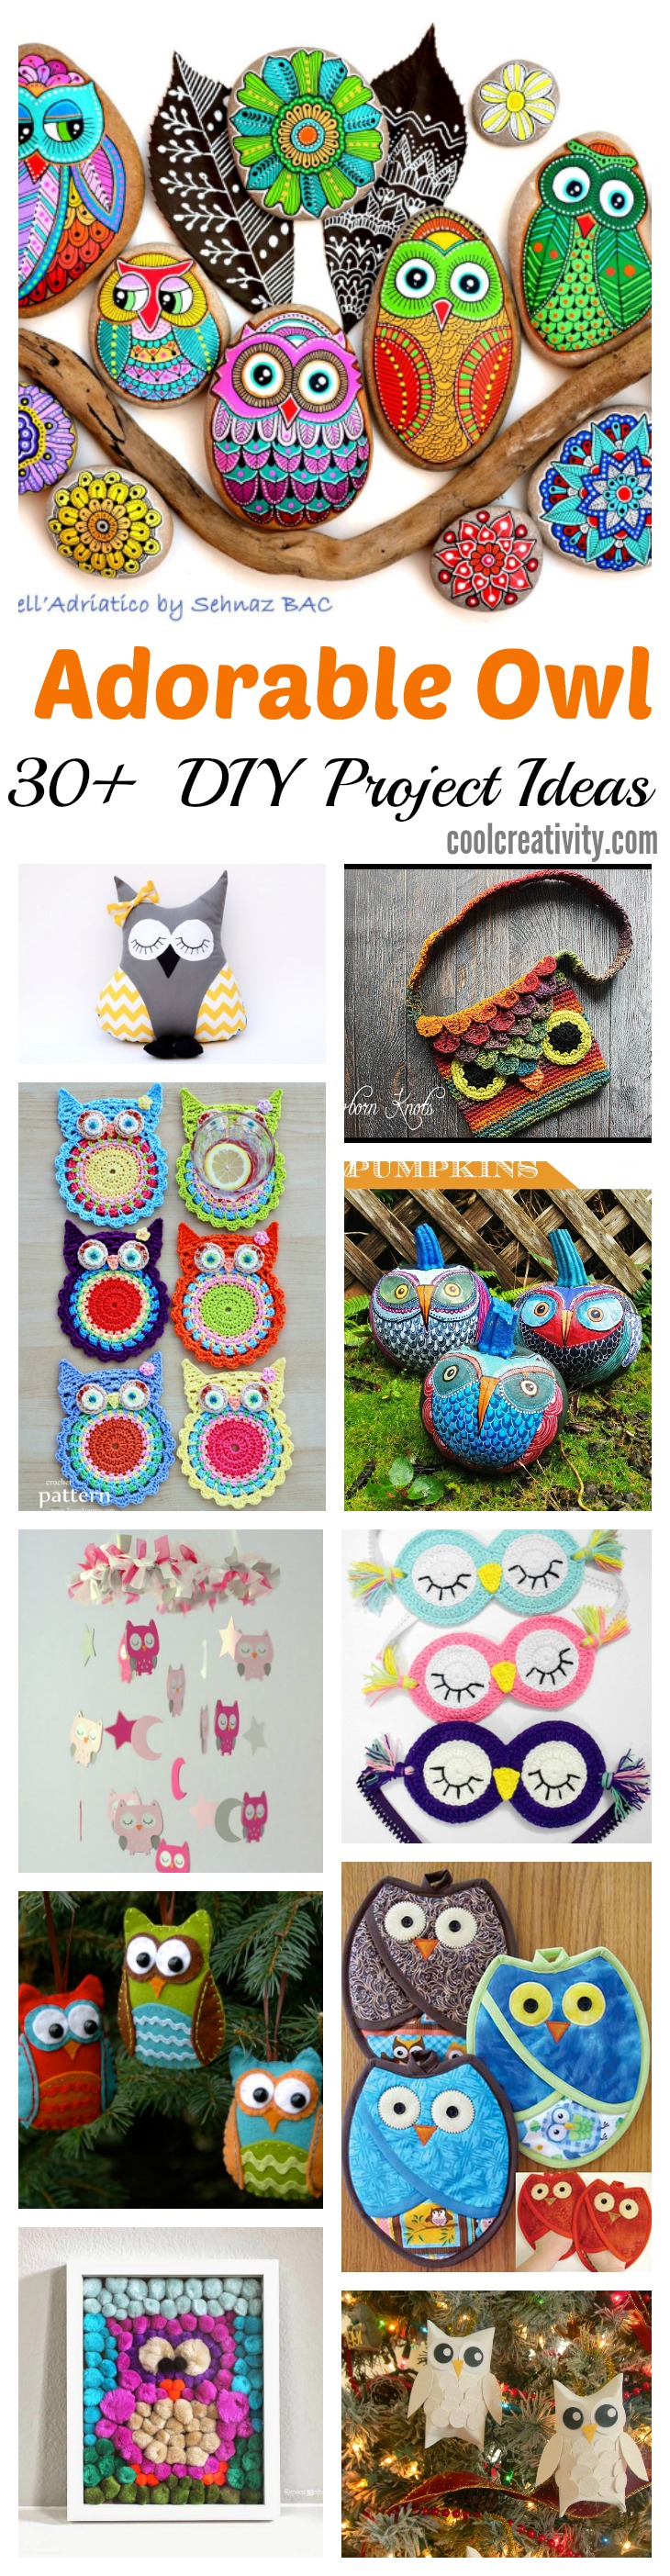 30+ Adorable Owl DIY Project Ideas